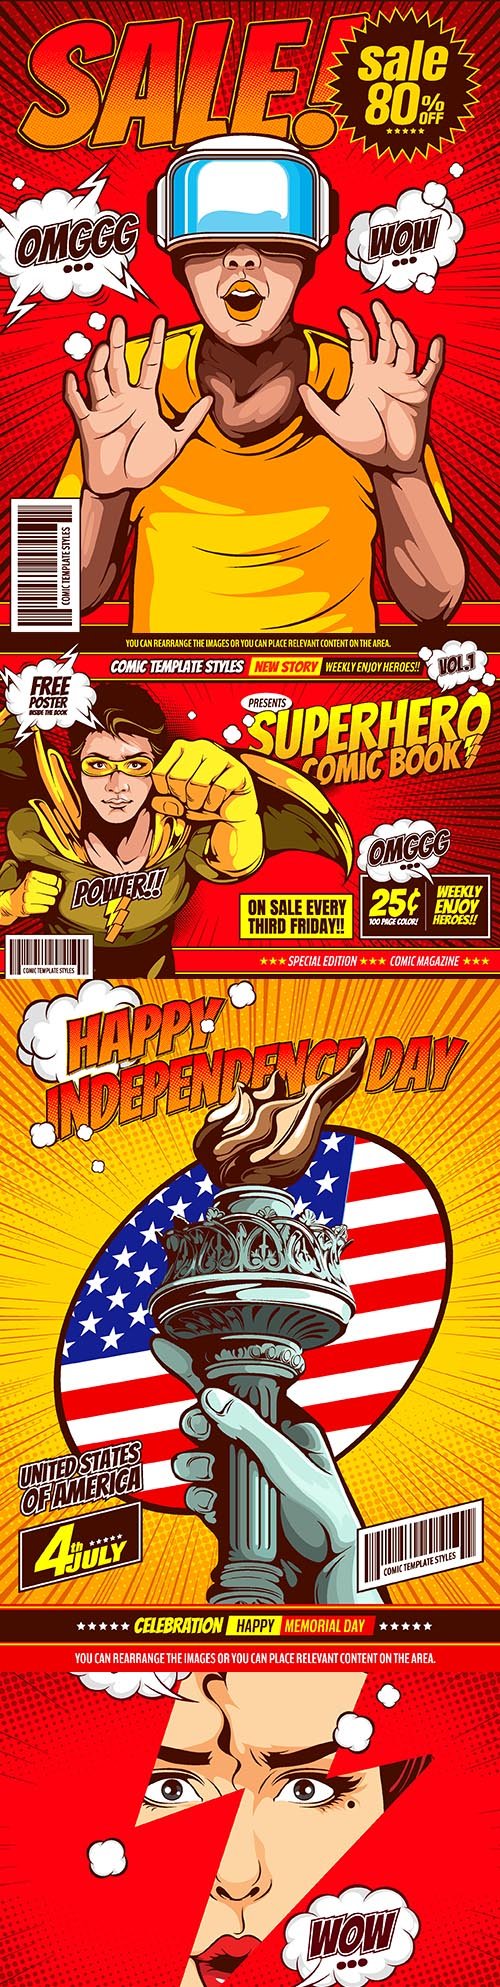 Superhero comic book covers pop art design